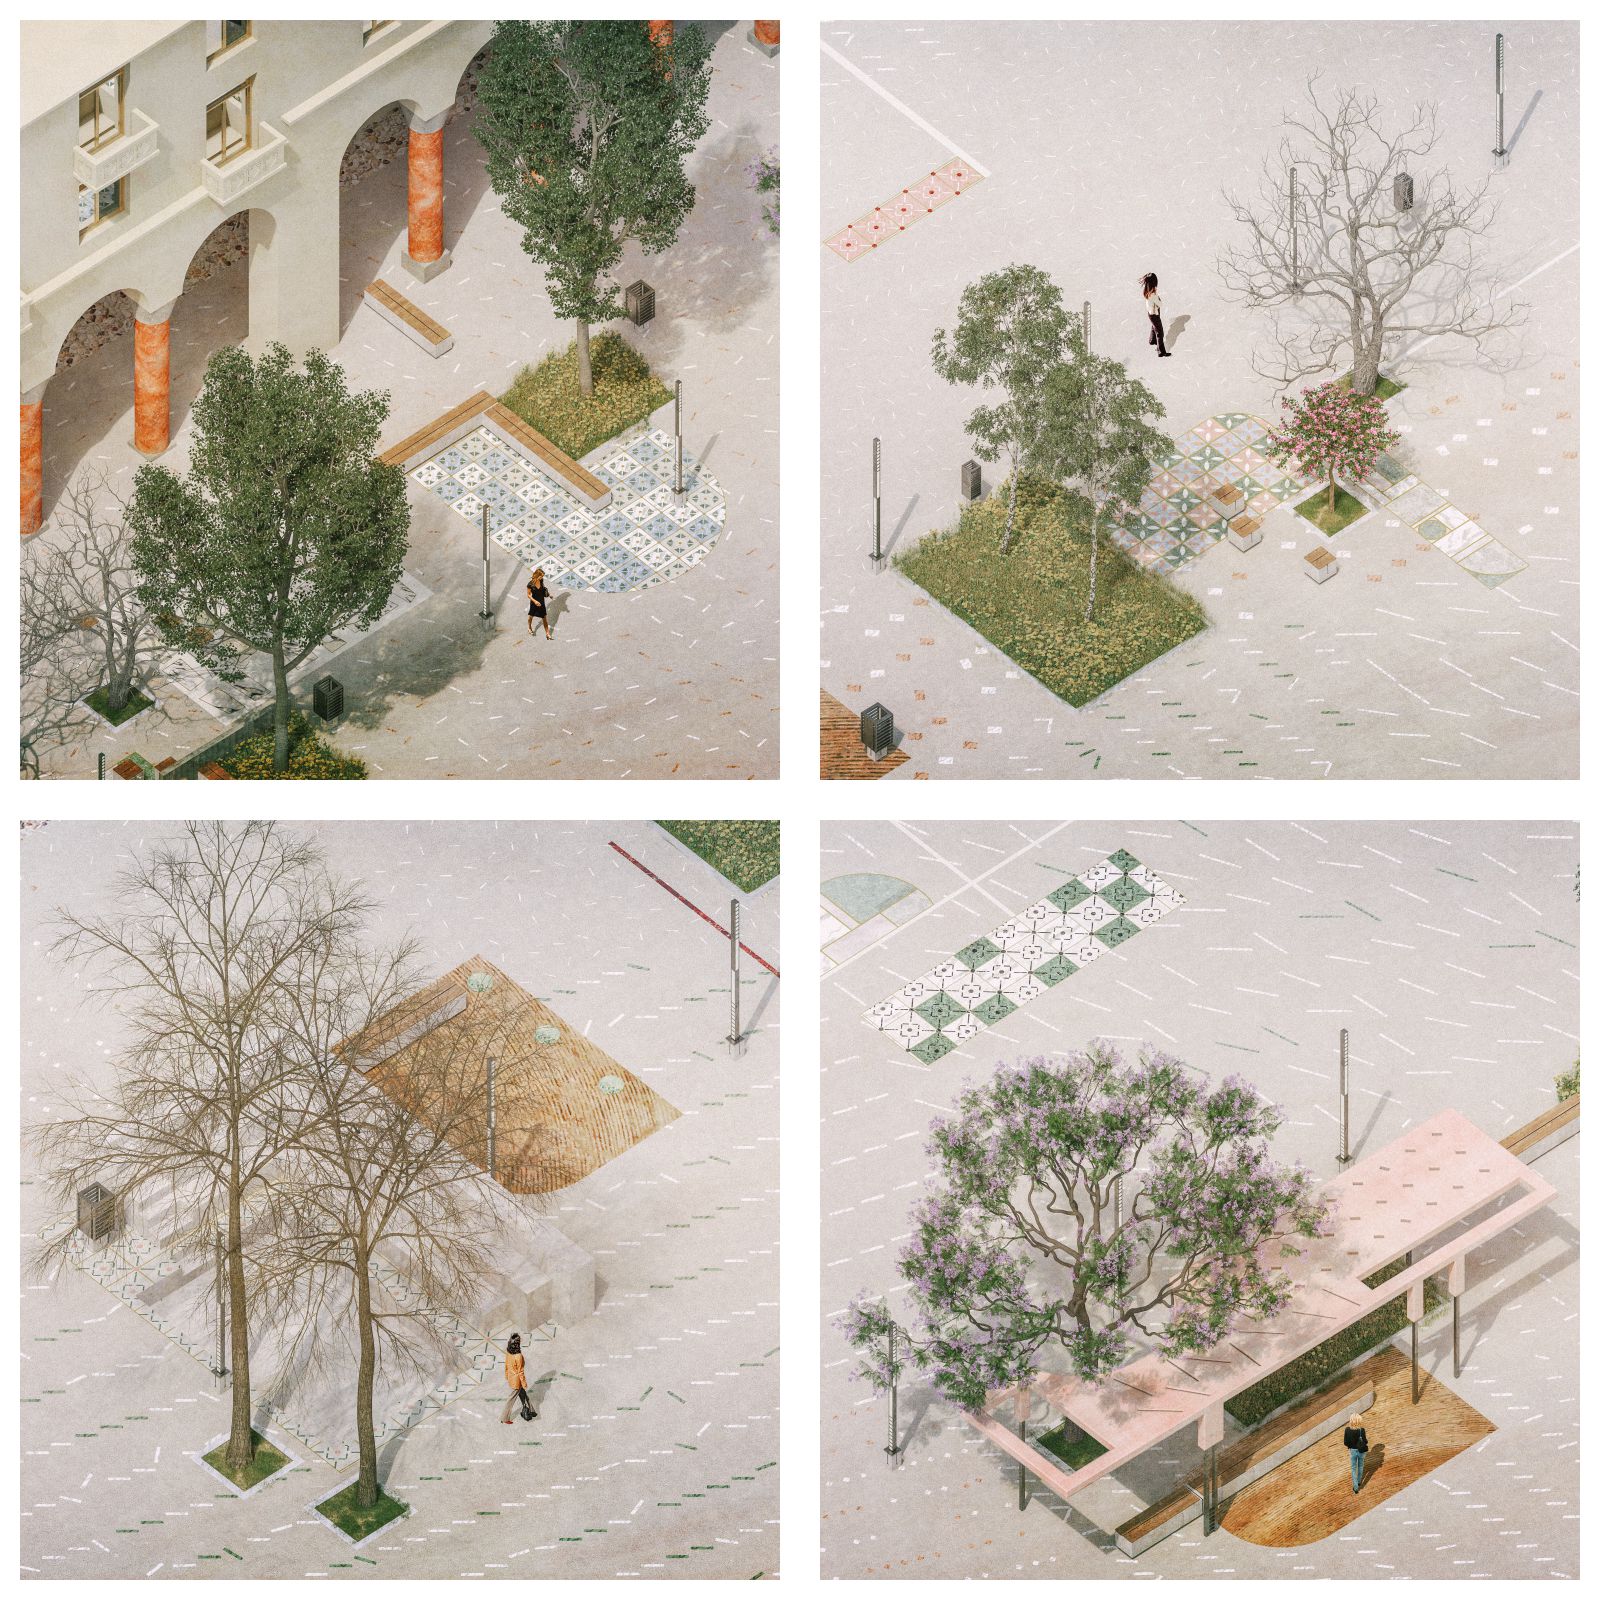 Archisearch LAMINA: object-e by D. Gourdoukis & K. Tryfonidou along with Ch. Tsaousidou, E. Papaspyrou, M. Nestora & G. Antoniadis win 2nd Prize at the open architectural competition 